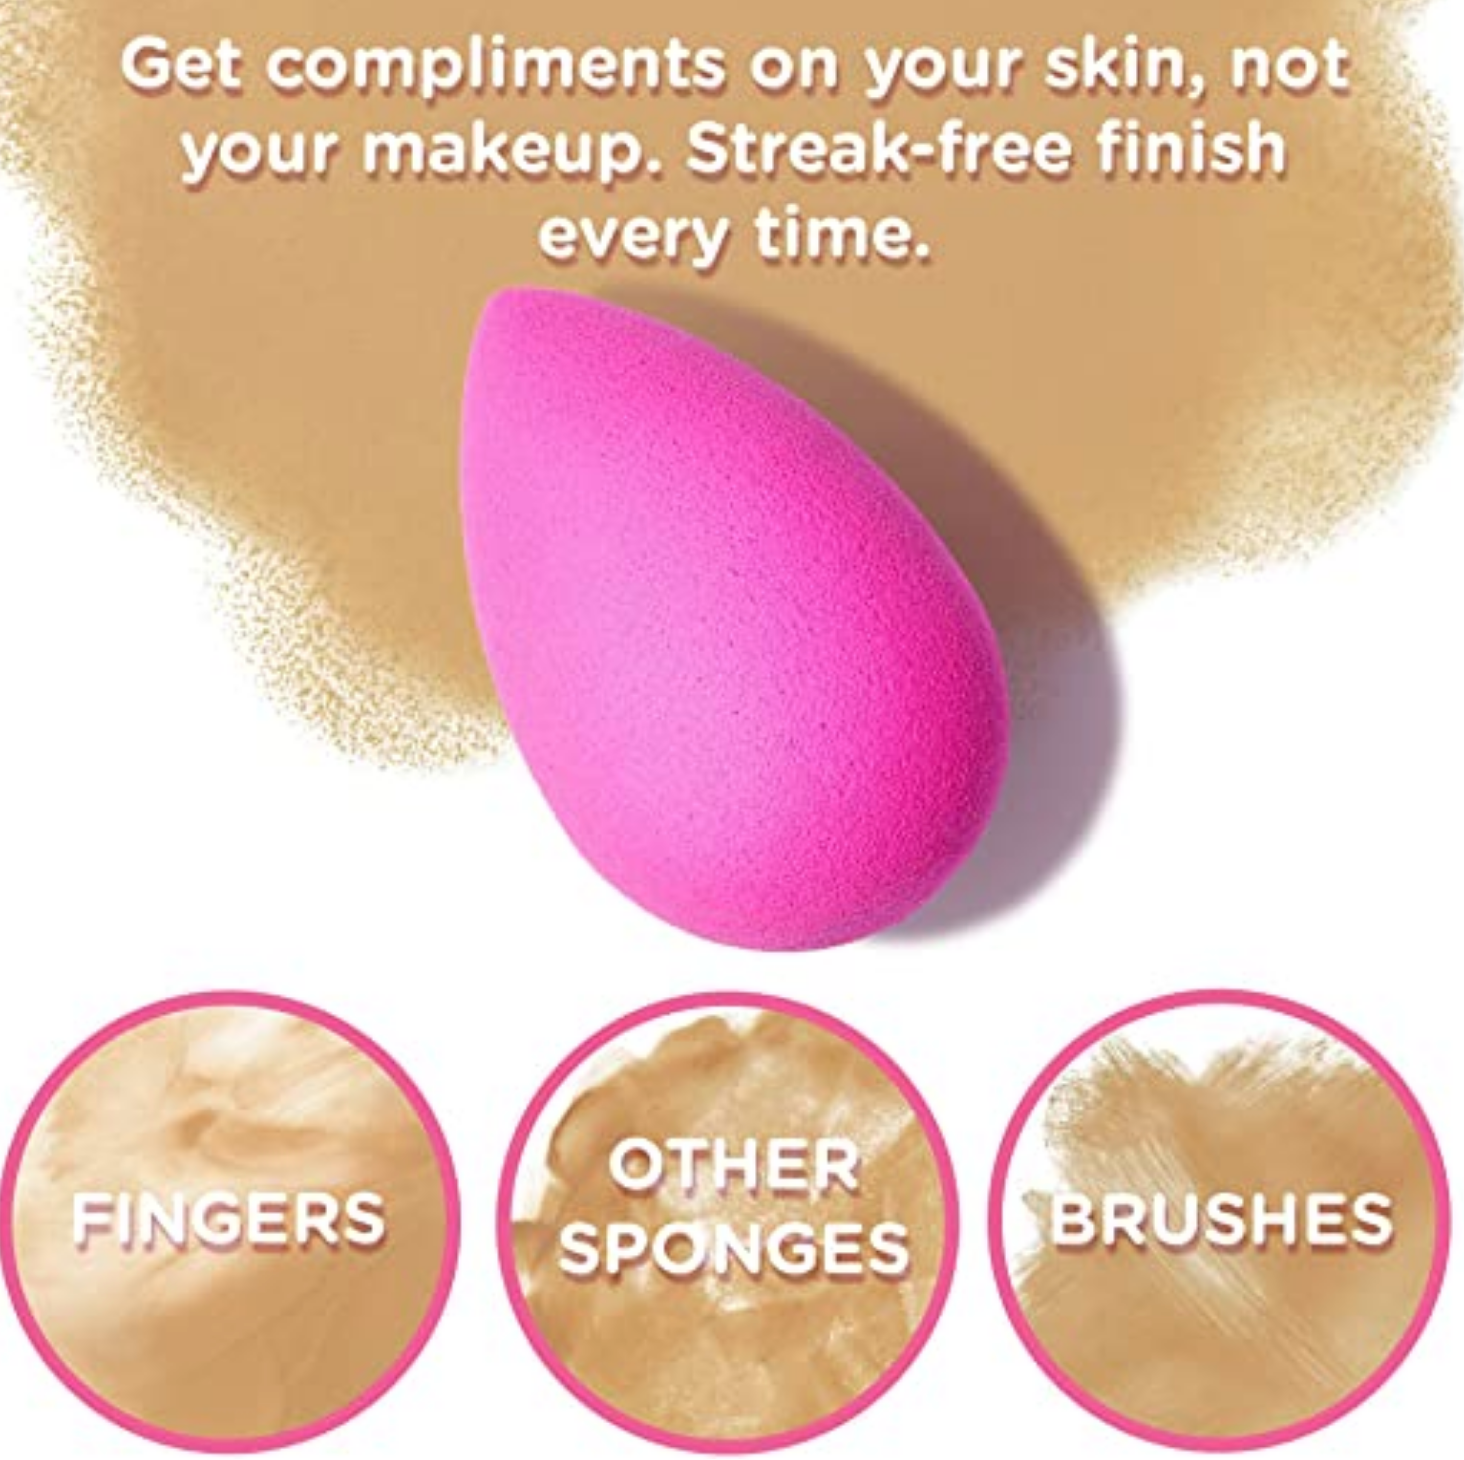 Benefits of using Beautyblender